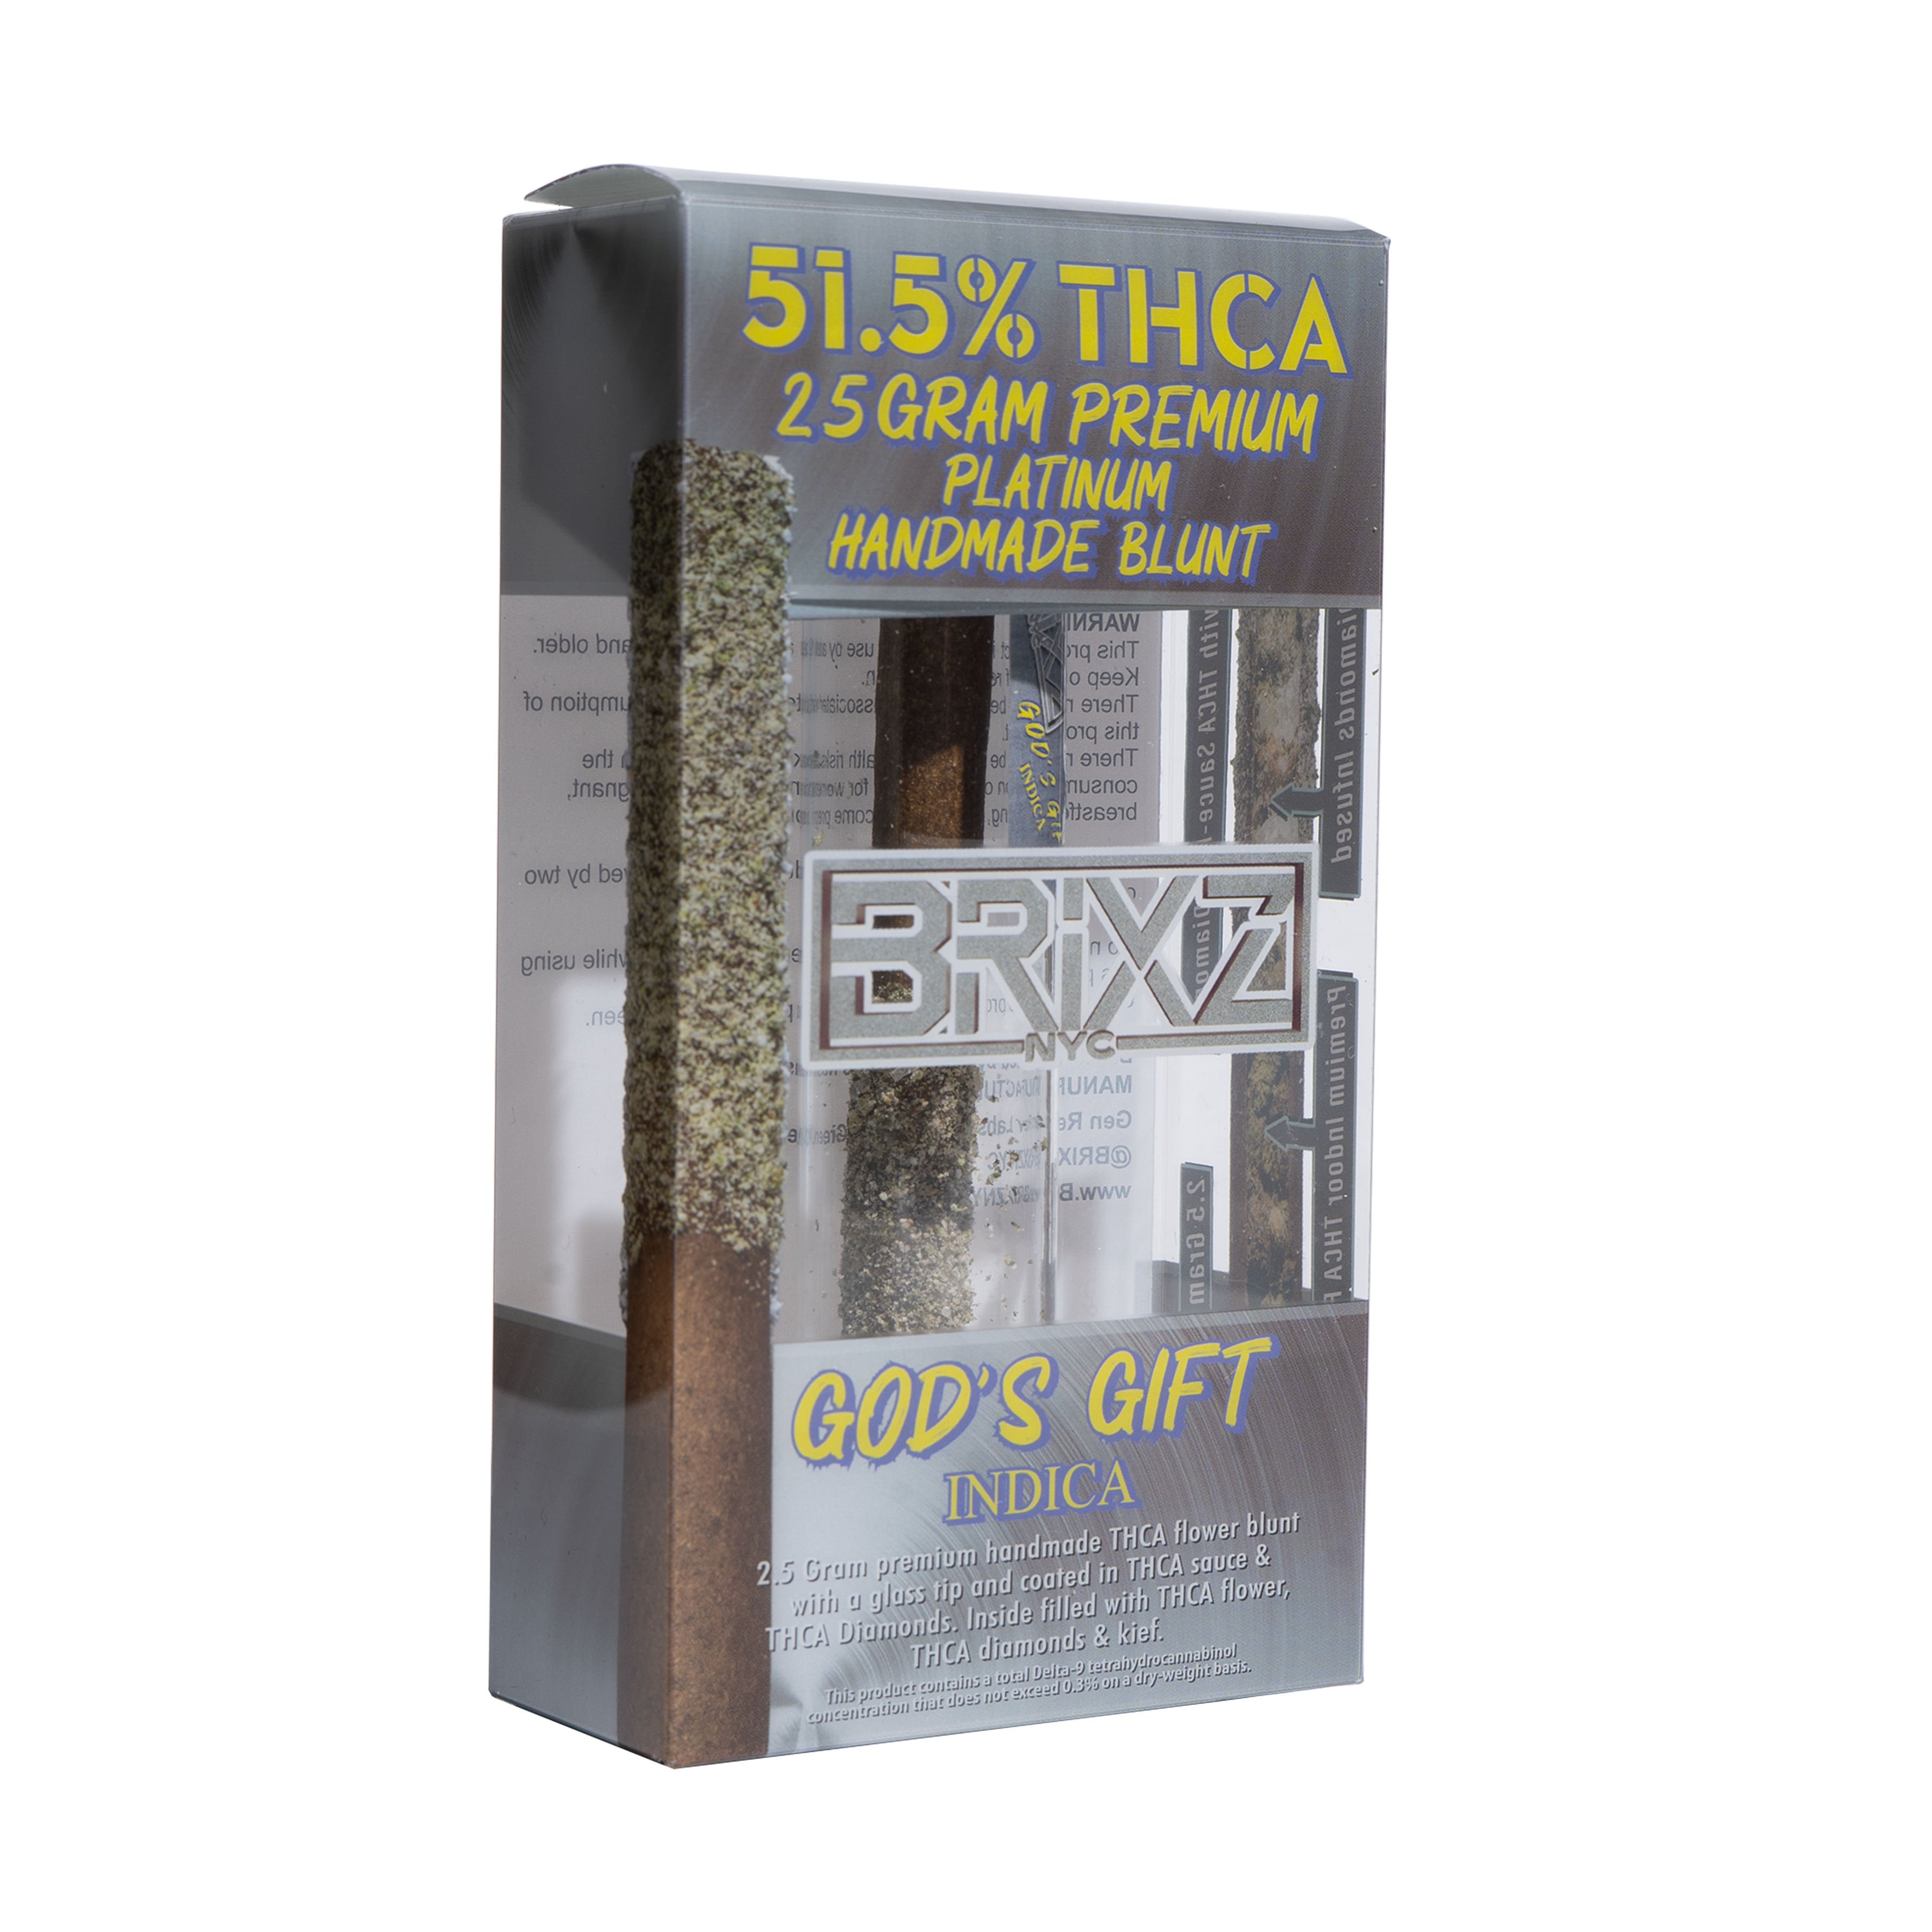 BRIXZ Platinum THCA Pre Roll - God's Gift [2.5G]